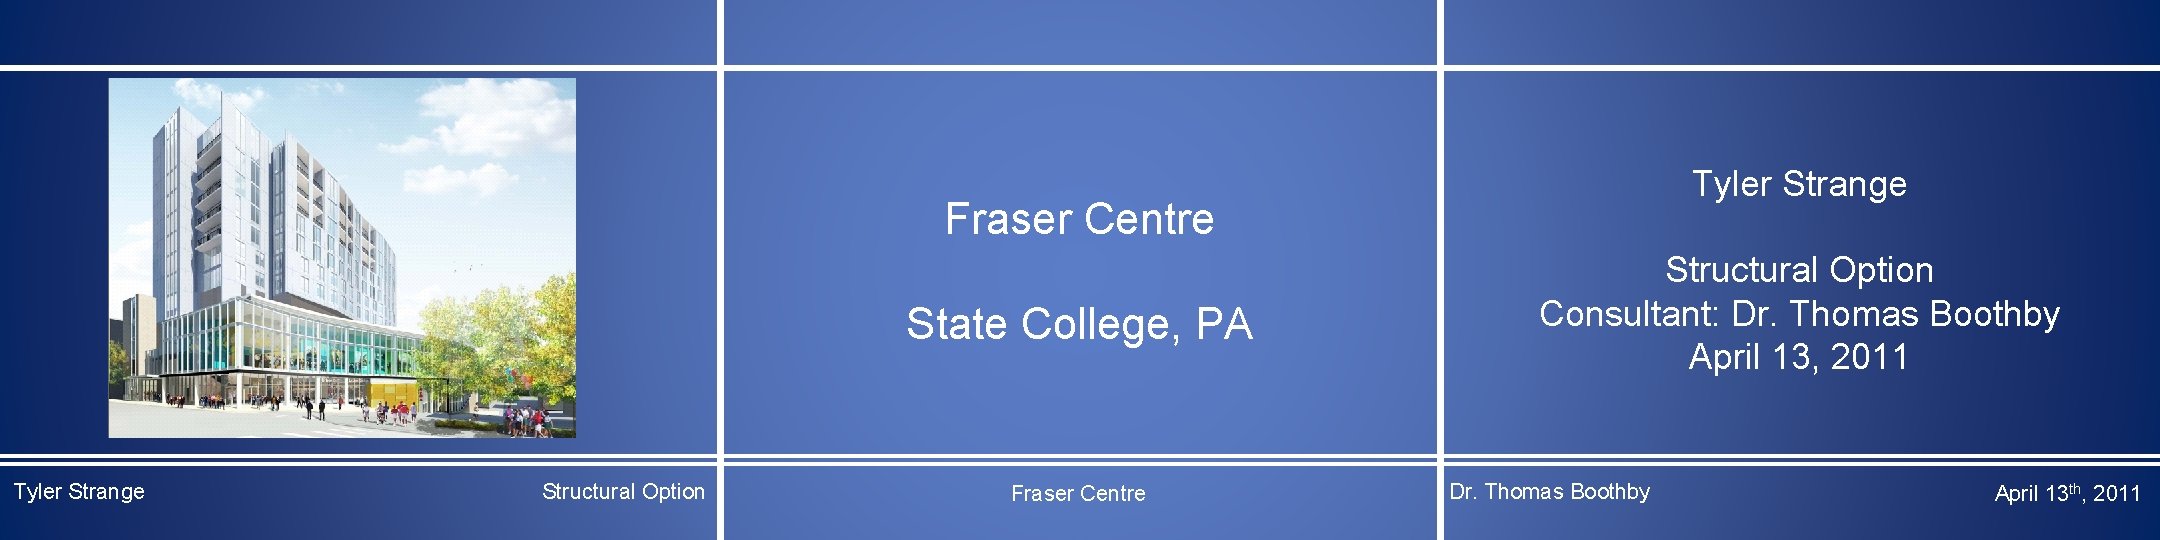 Tyler Strange Fraser Centre State College, PA Tyler Strange Structural Option Fraser Centre Structural